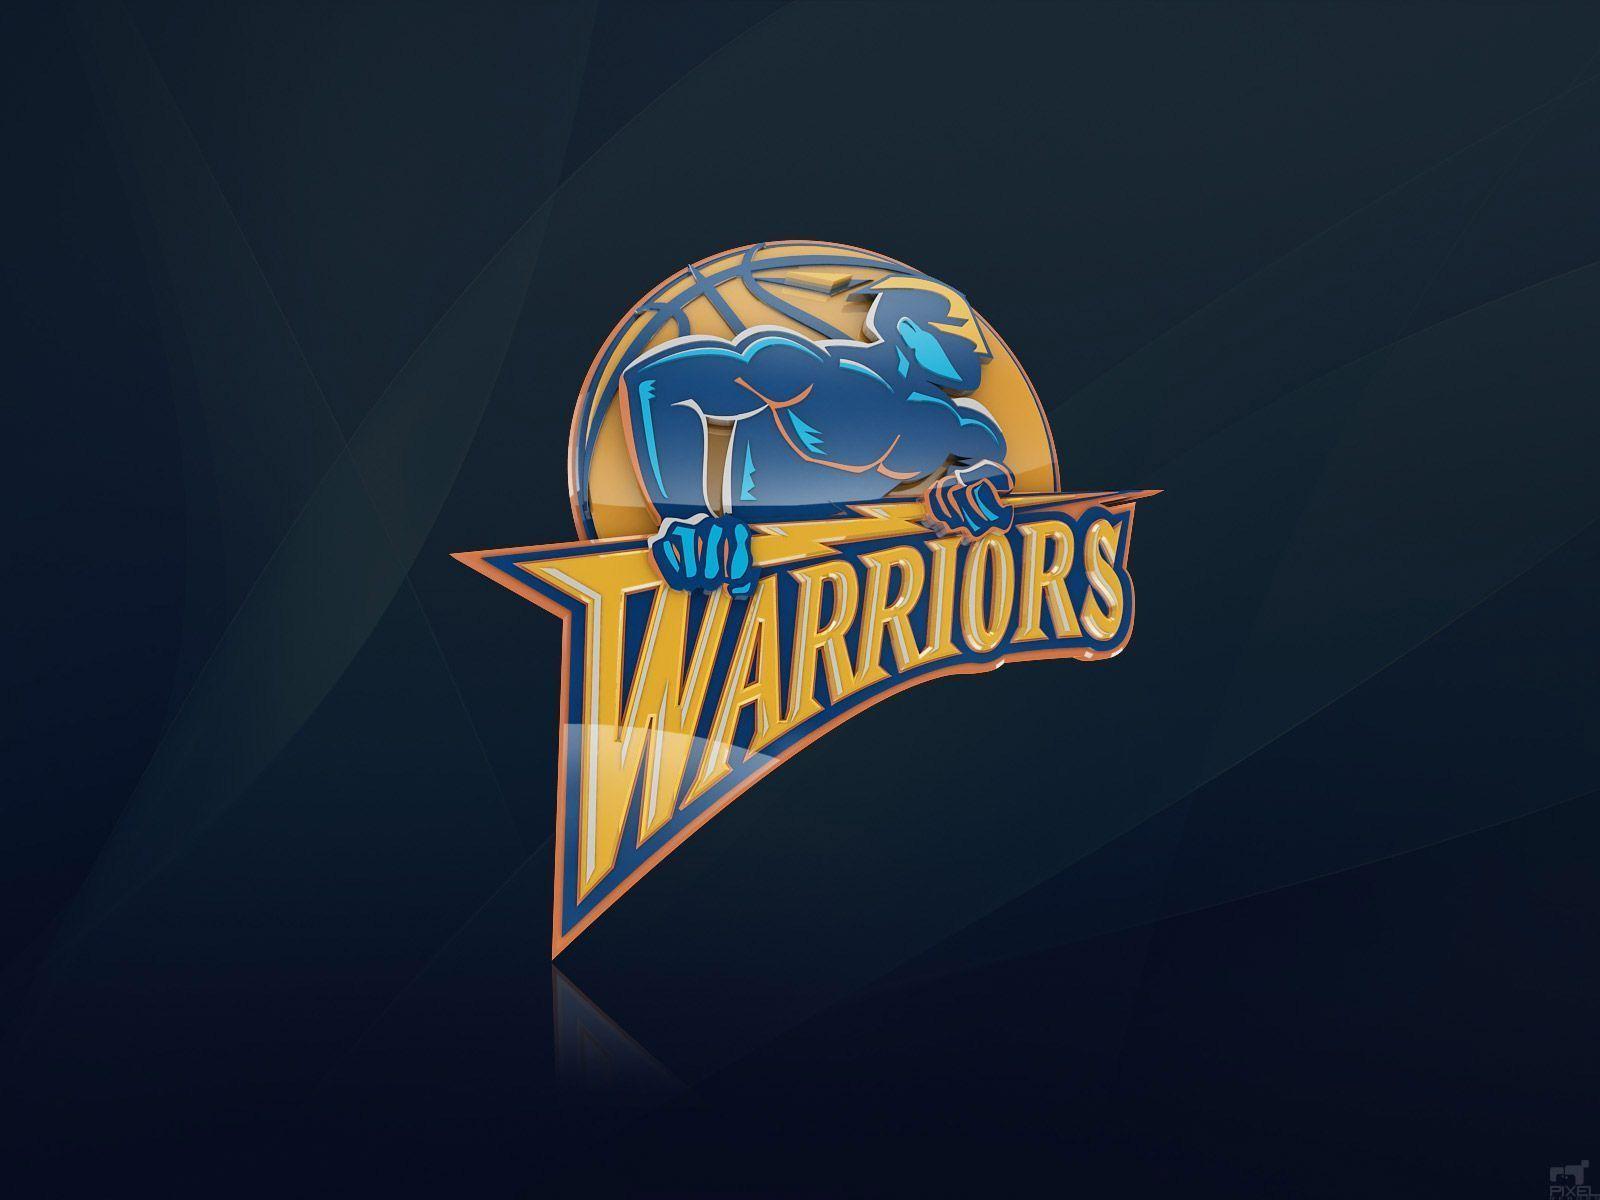 NBA Team Logos Wallpapers 2015 - Wallpaper Cave